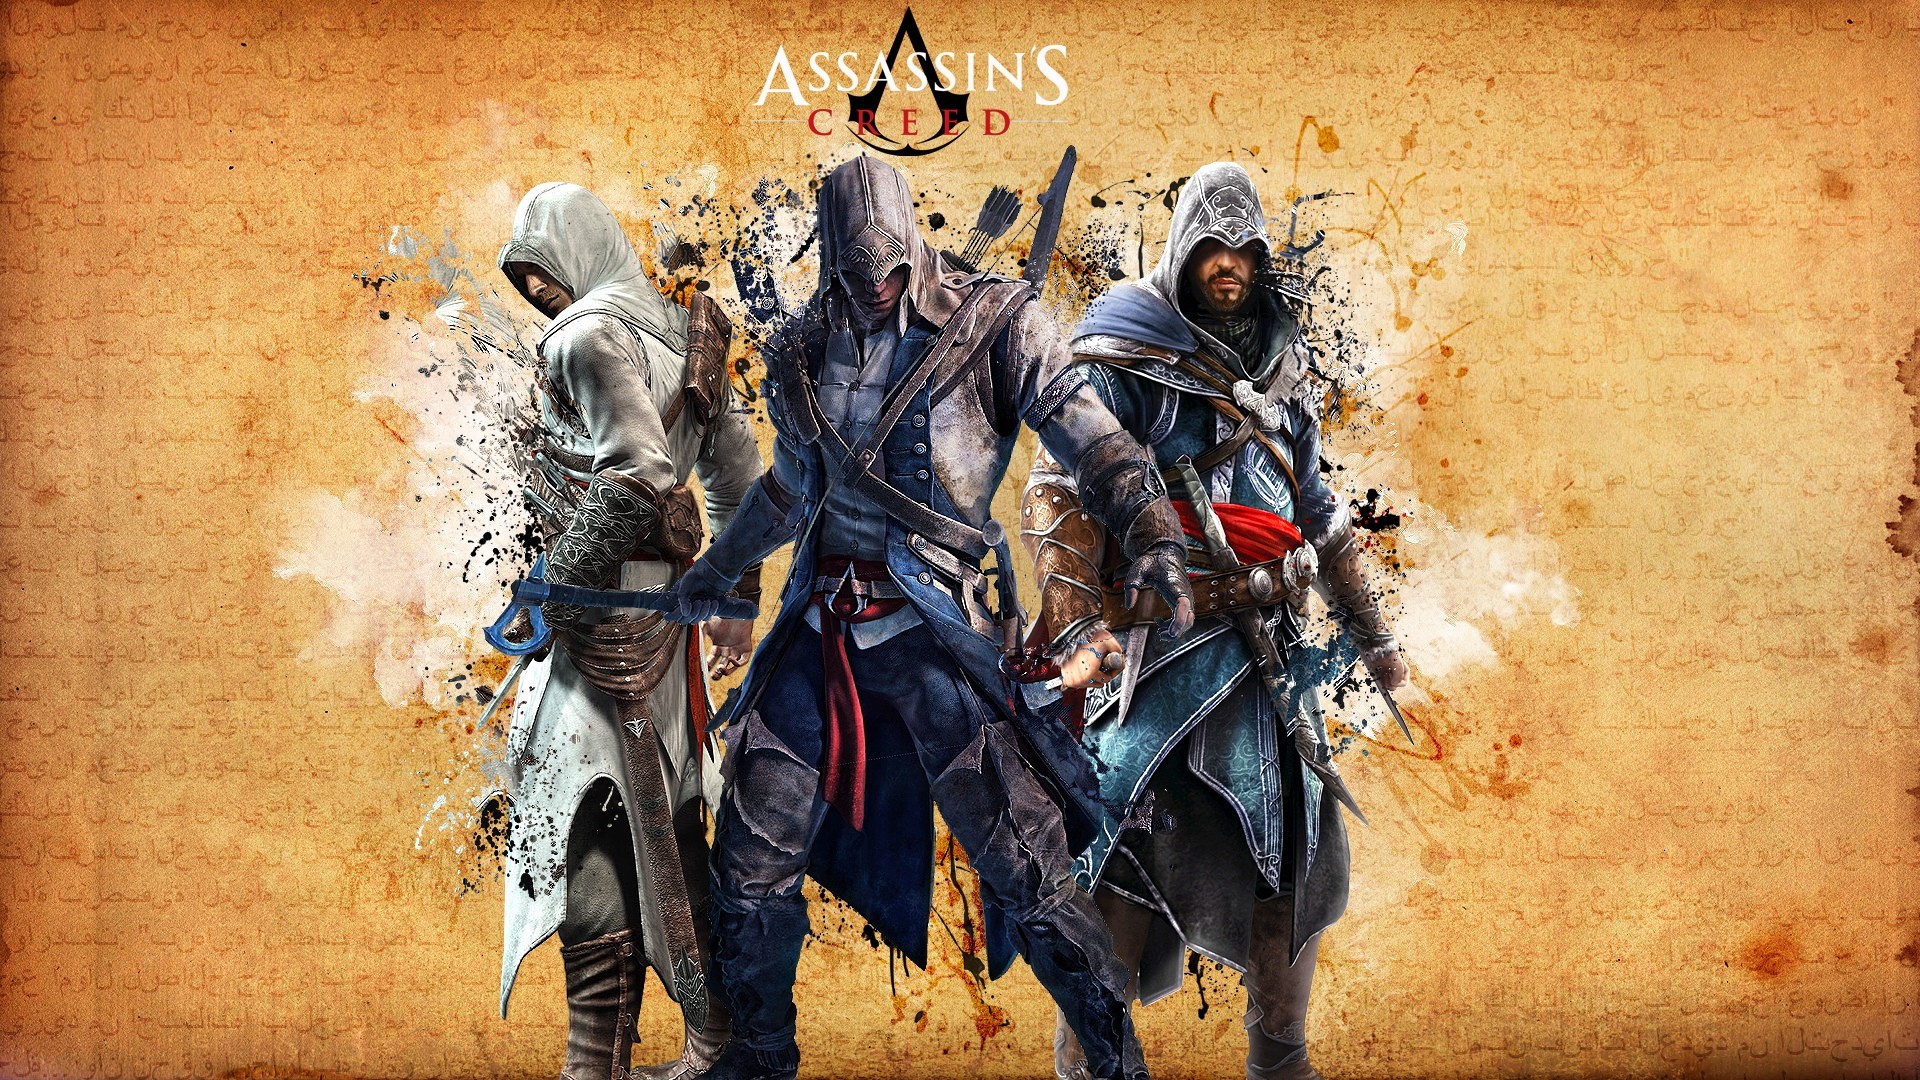 General 1920x1080 Altaïr Ibn-La'Ahad Ezio Auditore da Firenze Assassin's Creed Ubisoft Assassin's Creed 2 video game art video game man